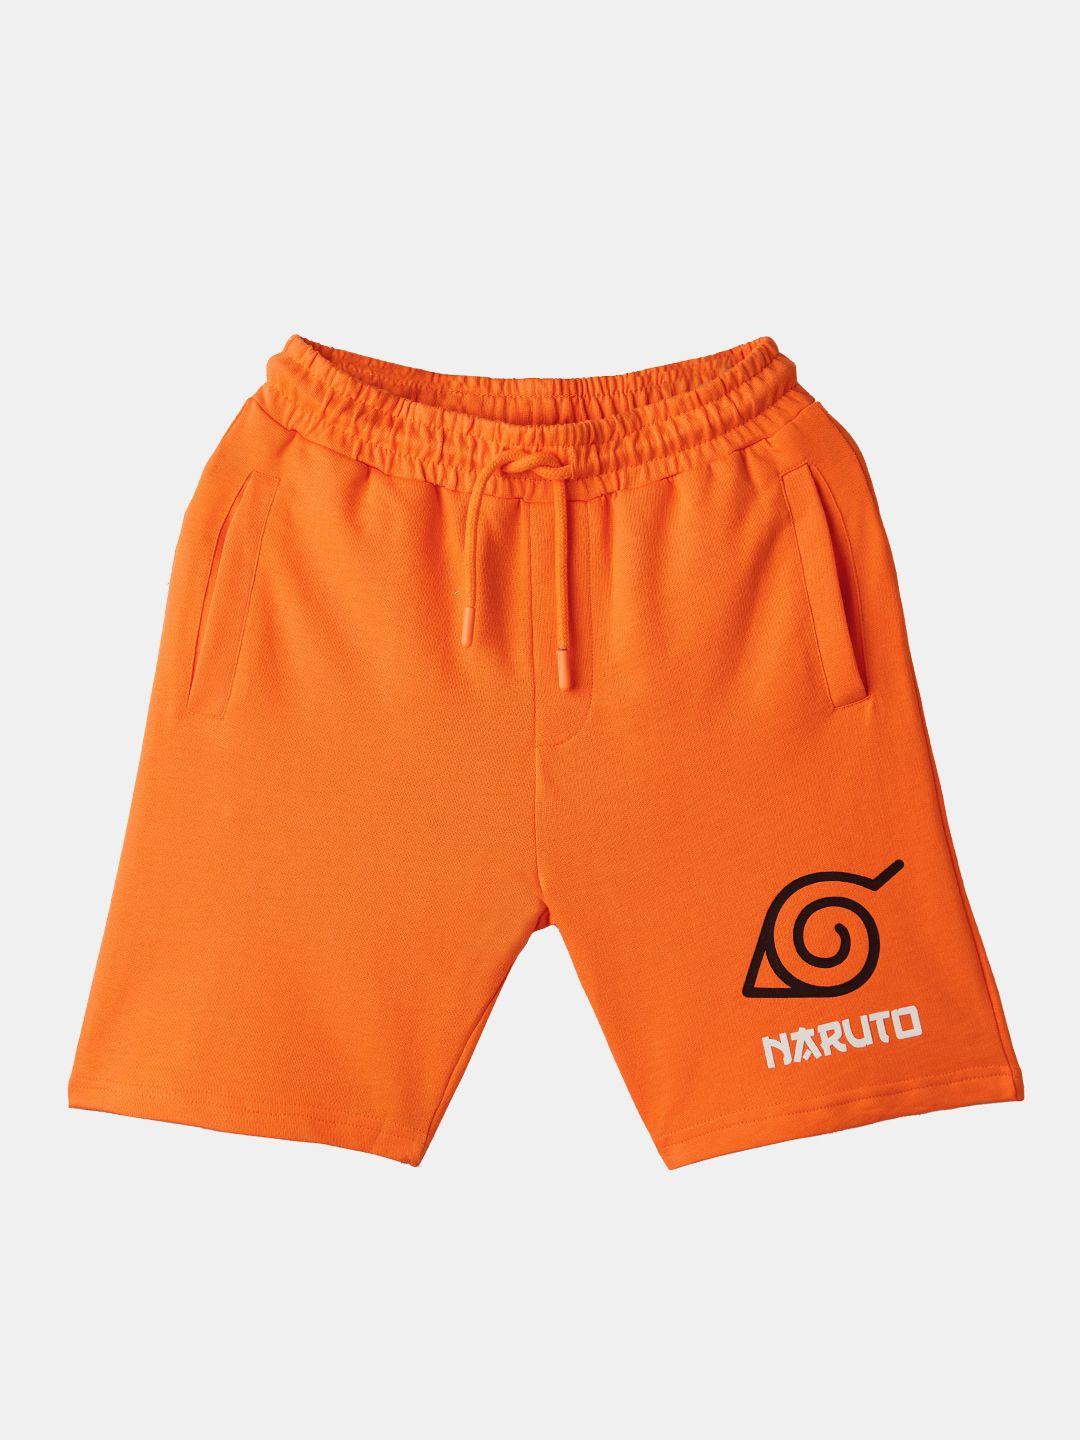 the souled store boys orange pure cotton shorts